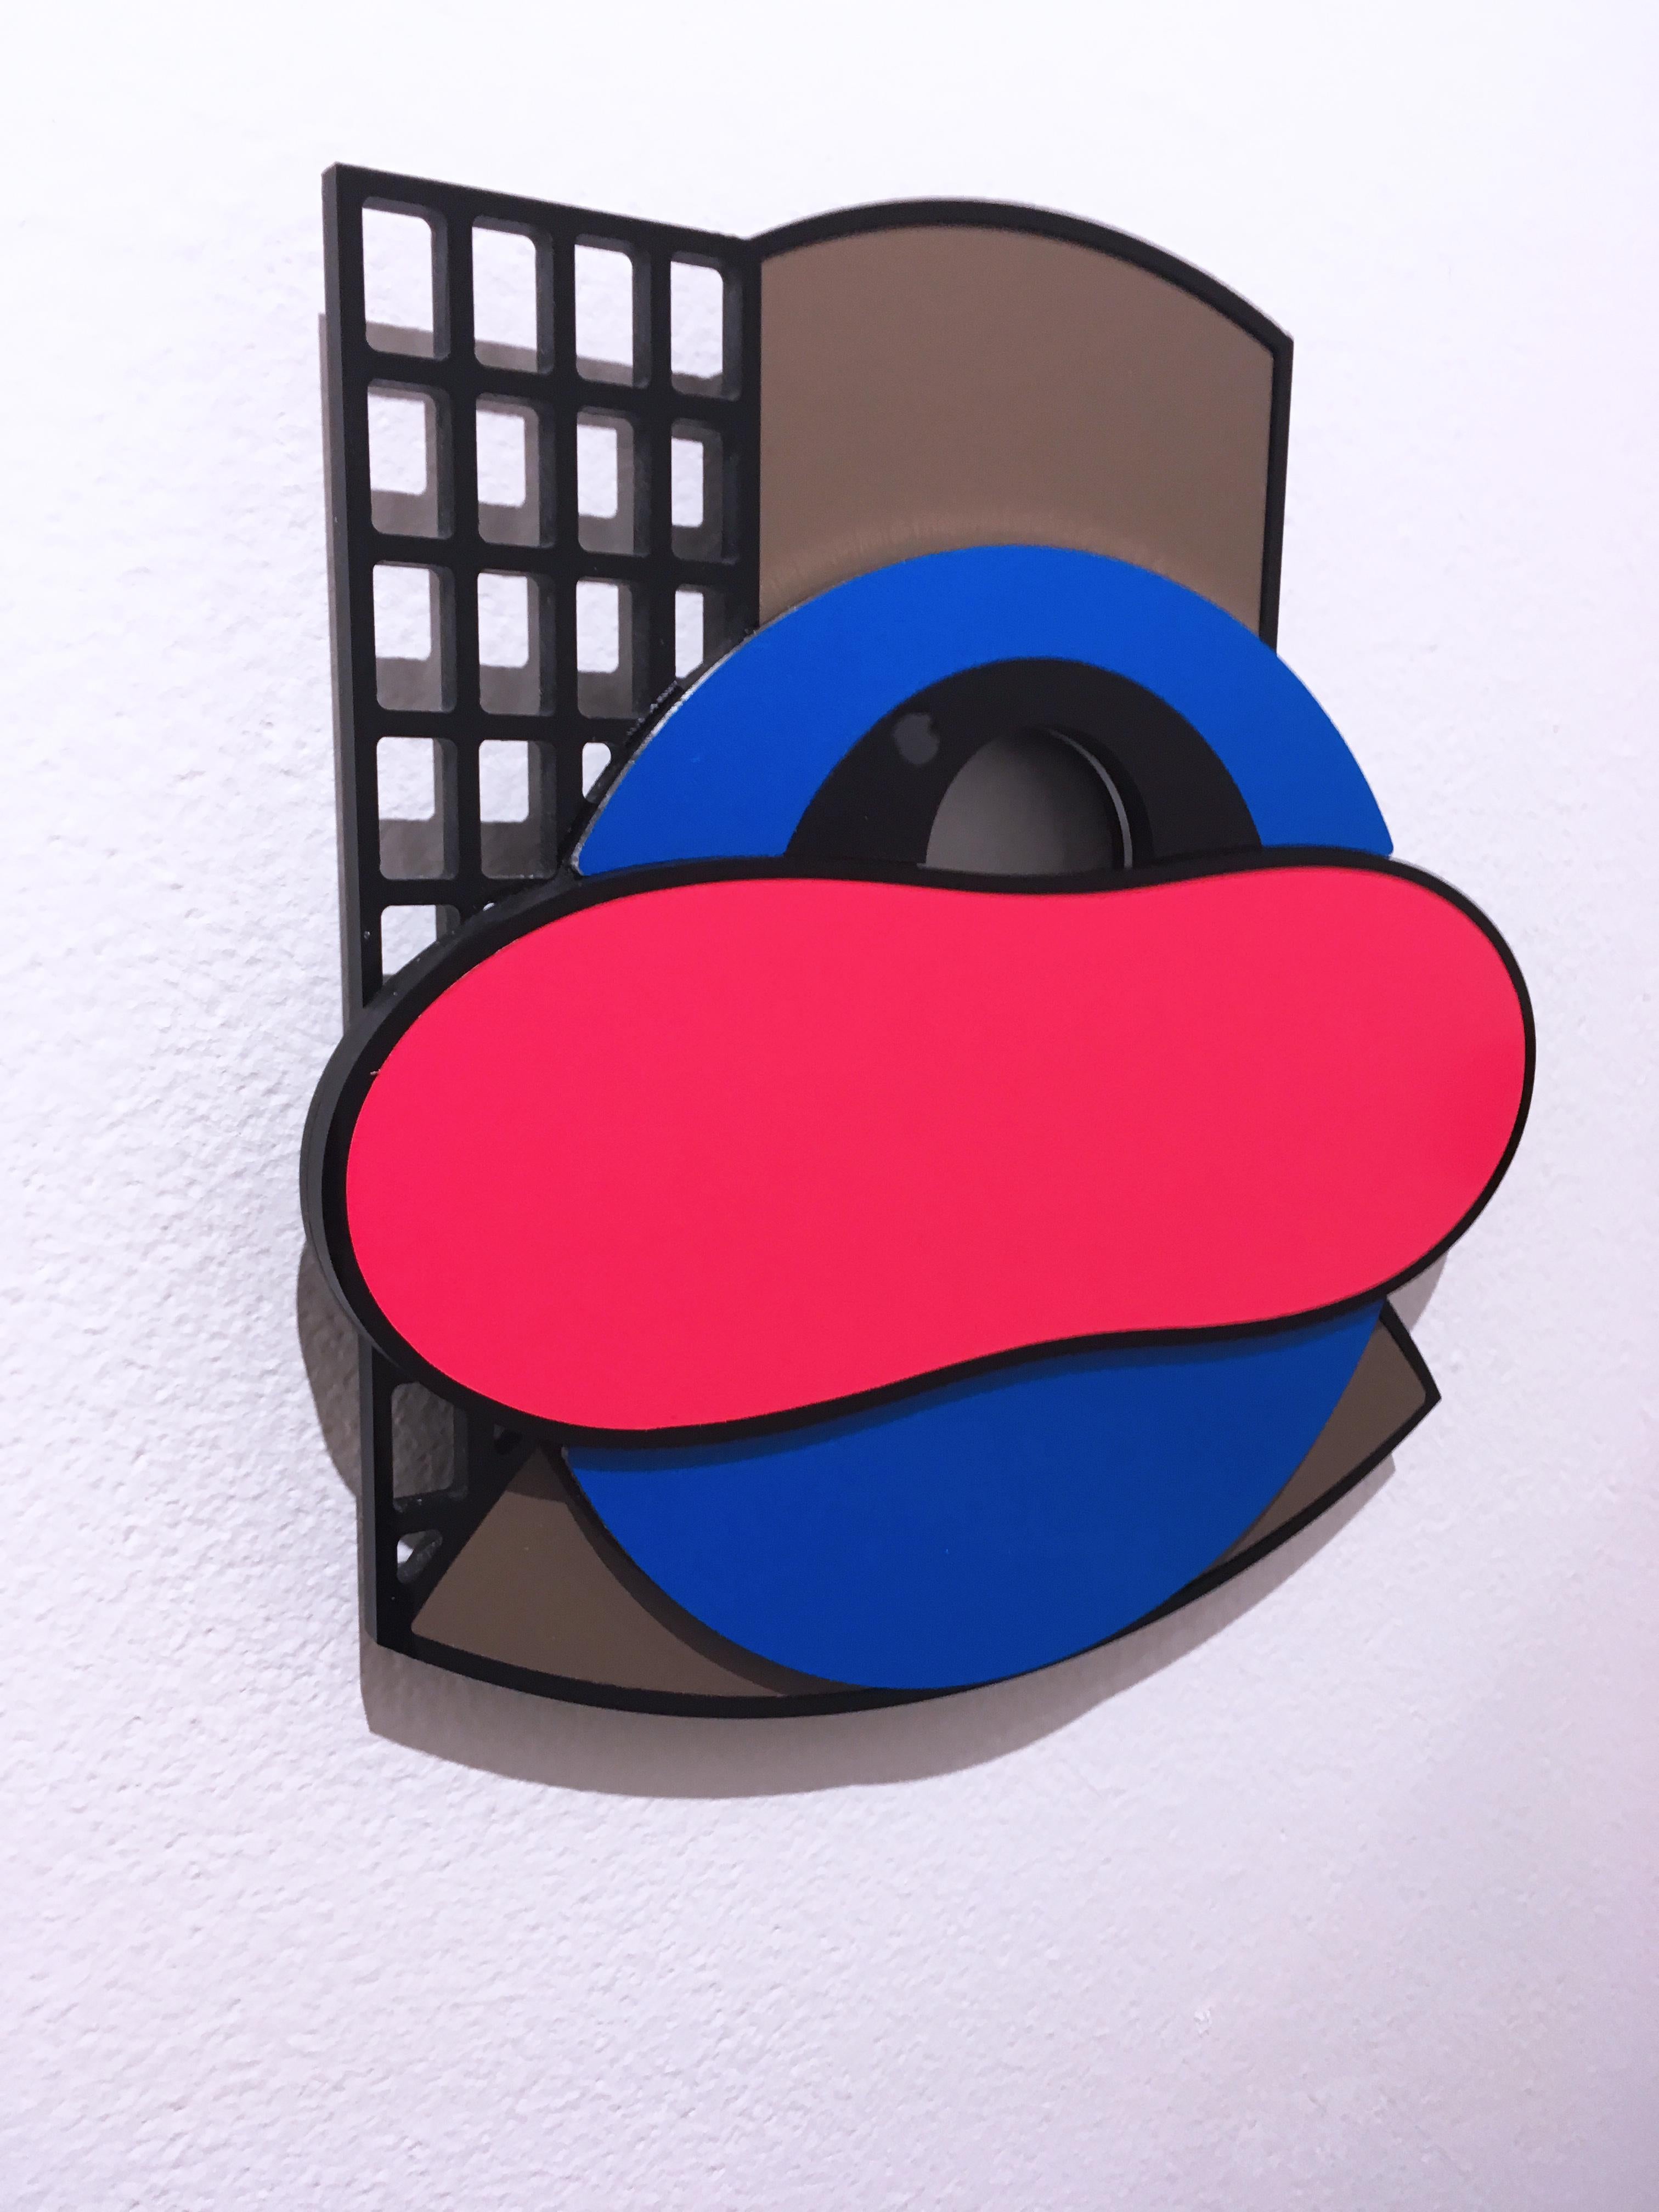 Ebena, acrylic, aluminum, vinyl, wall sculpture, abstract geometric, pink, blue - Abstract Geometric Sculpture by Joshua Edward Bennett